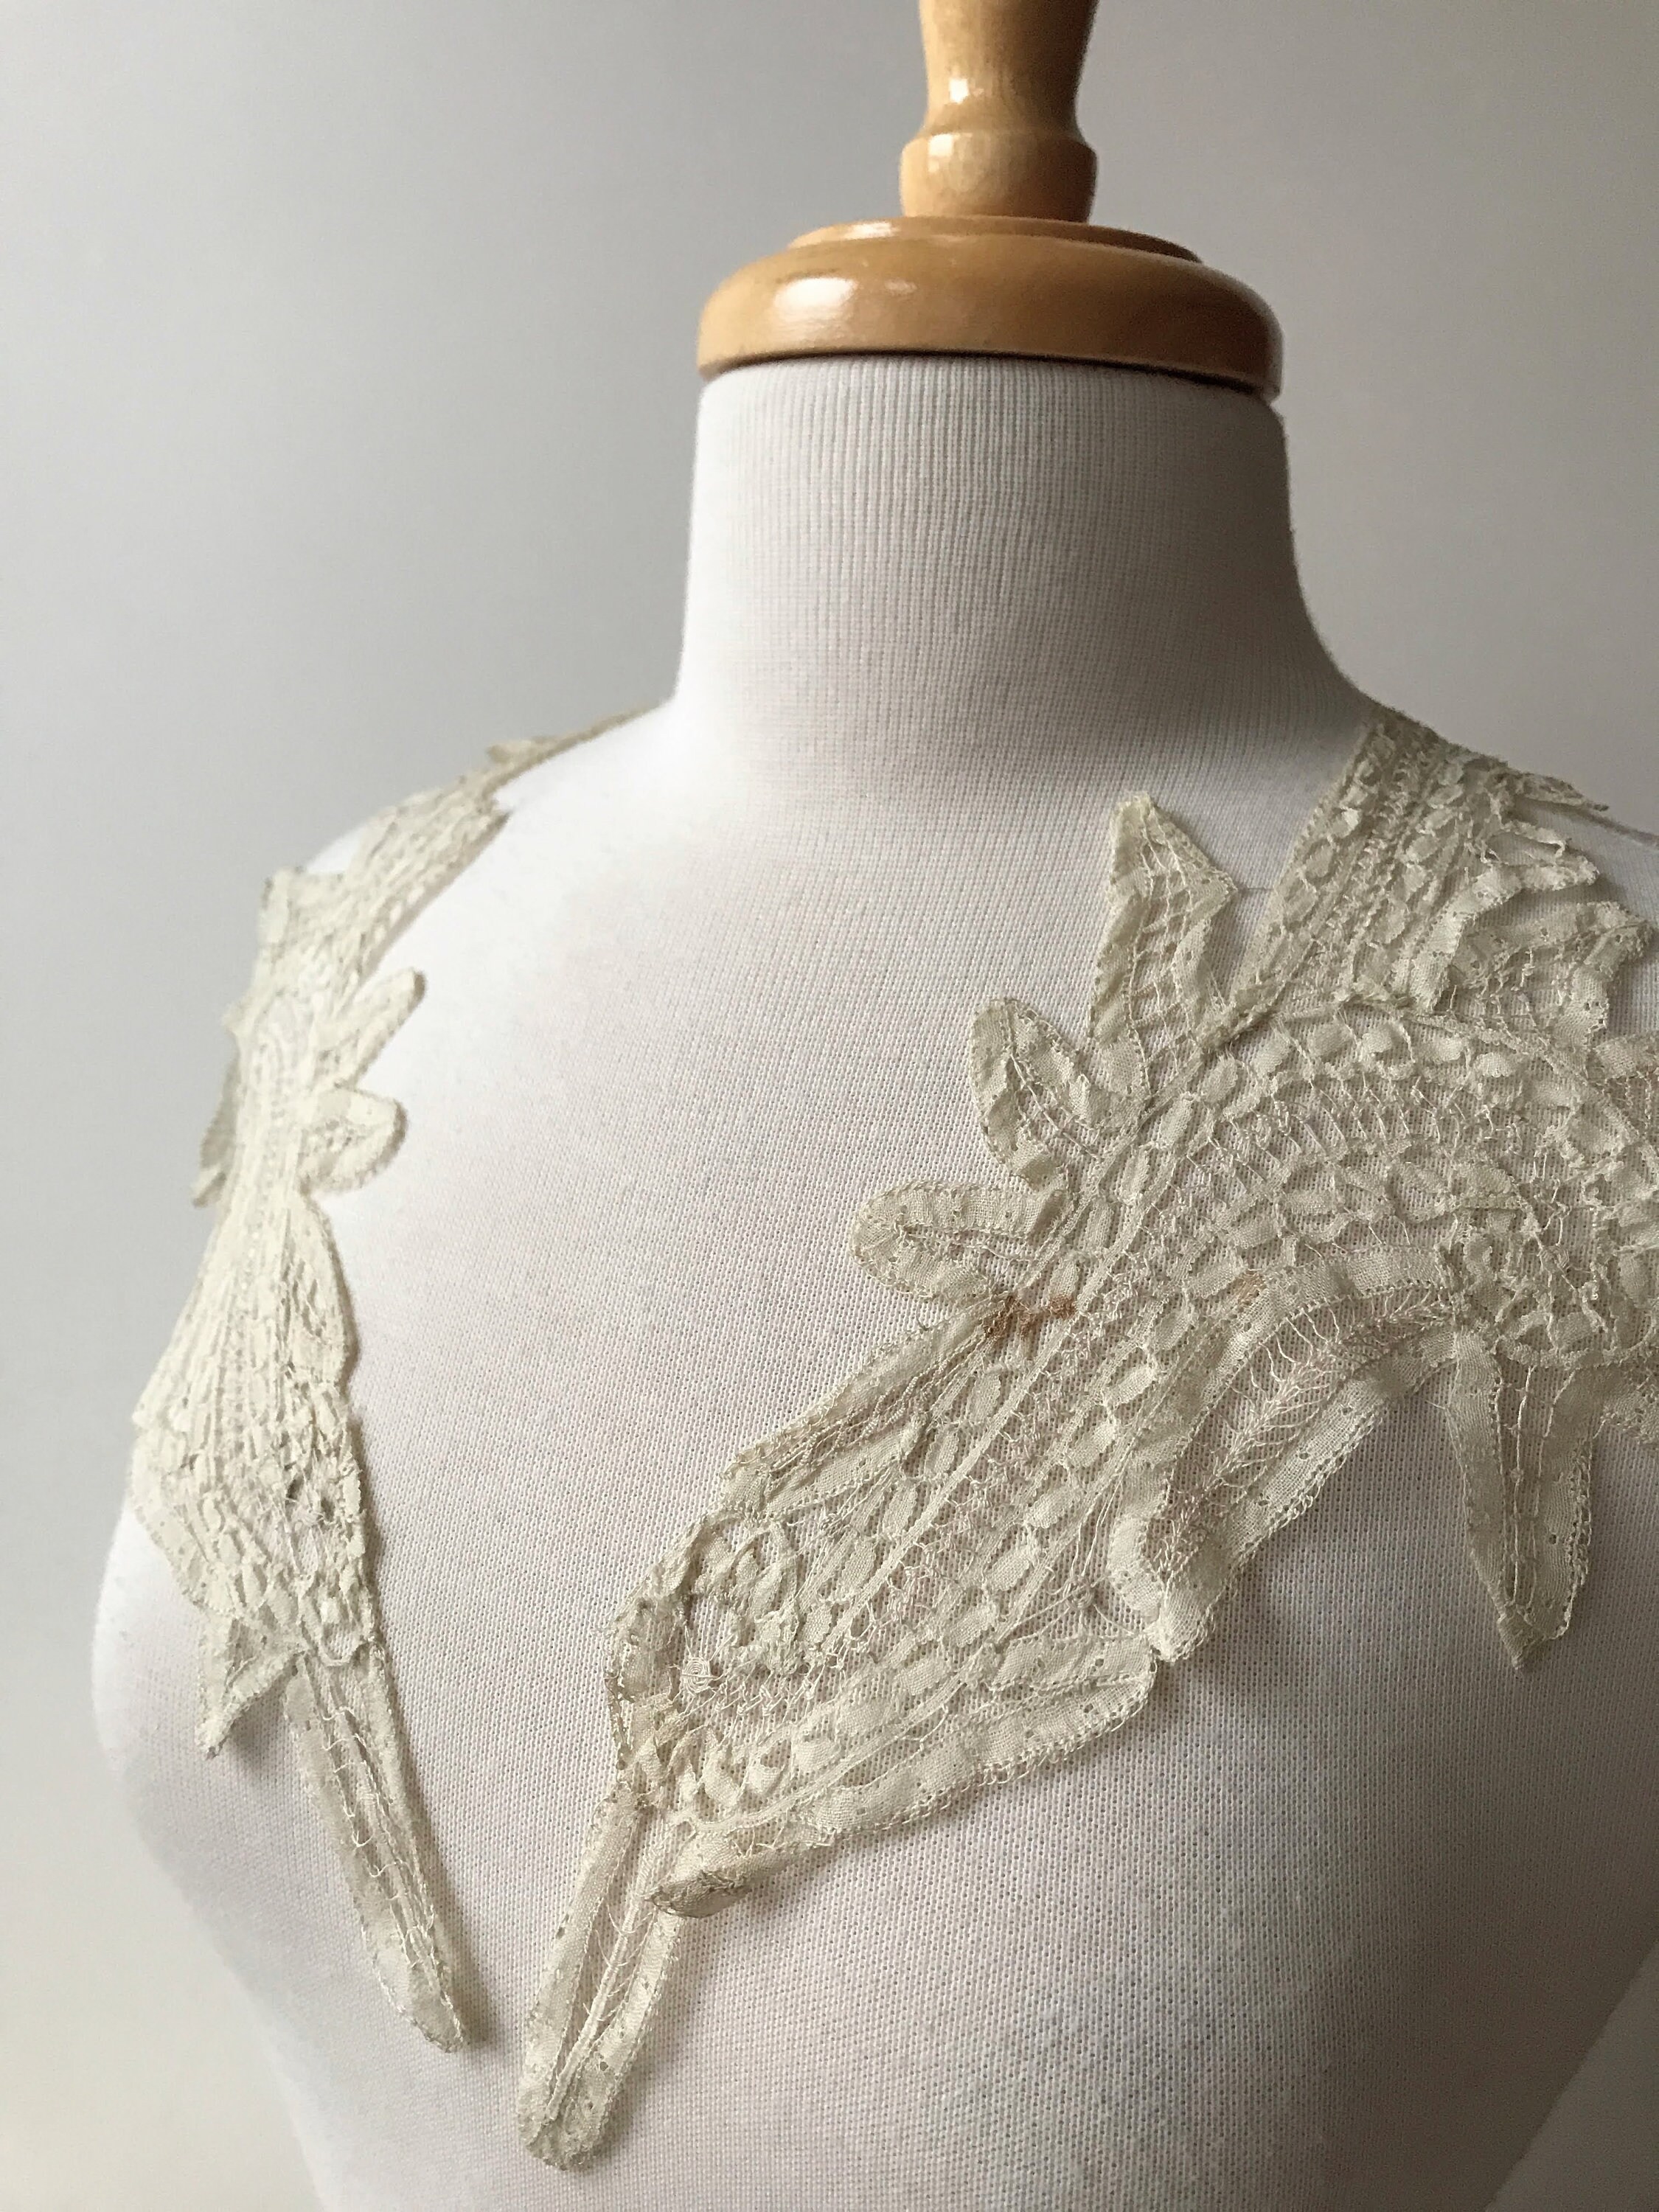 Fine Antique Lace Collar Cotton Handmade 19th Century | Etsy